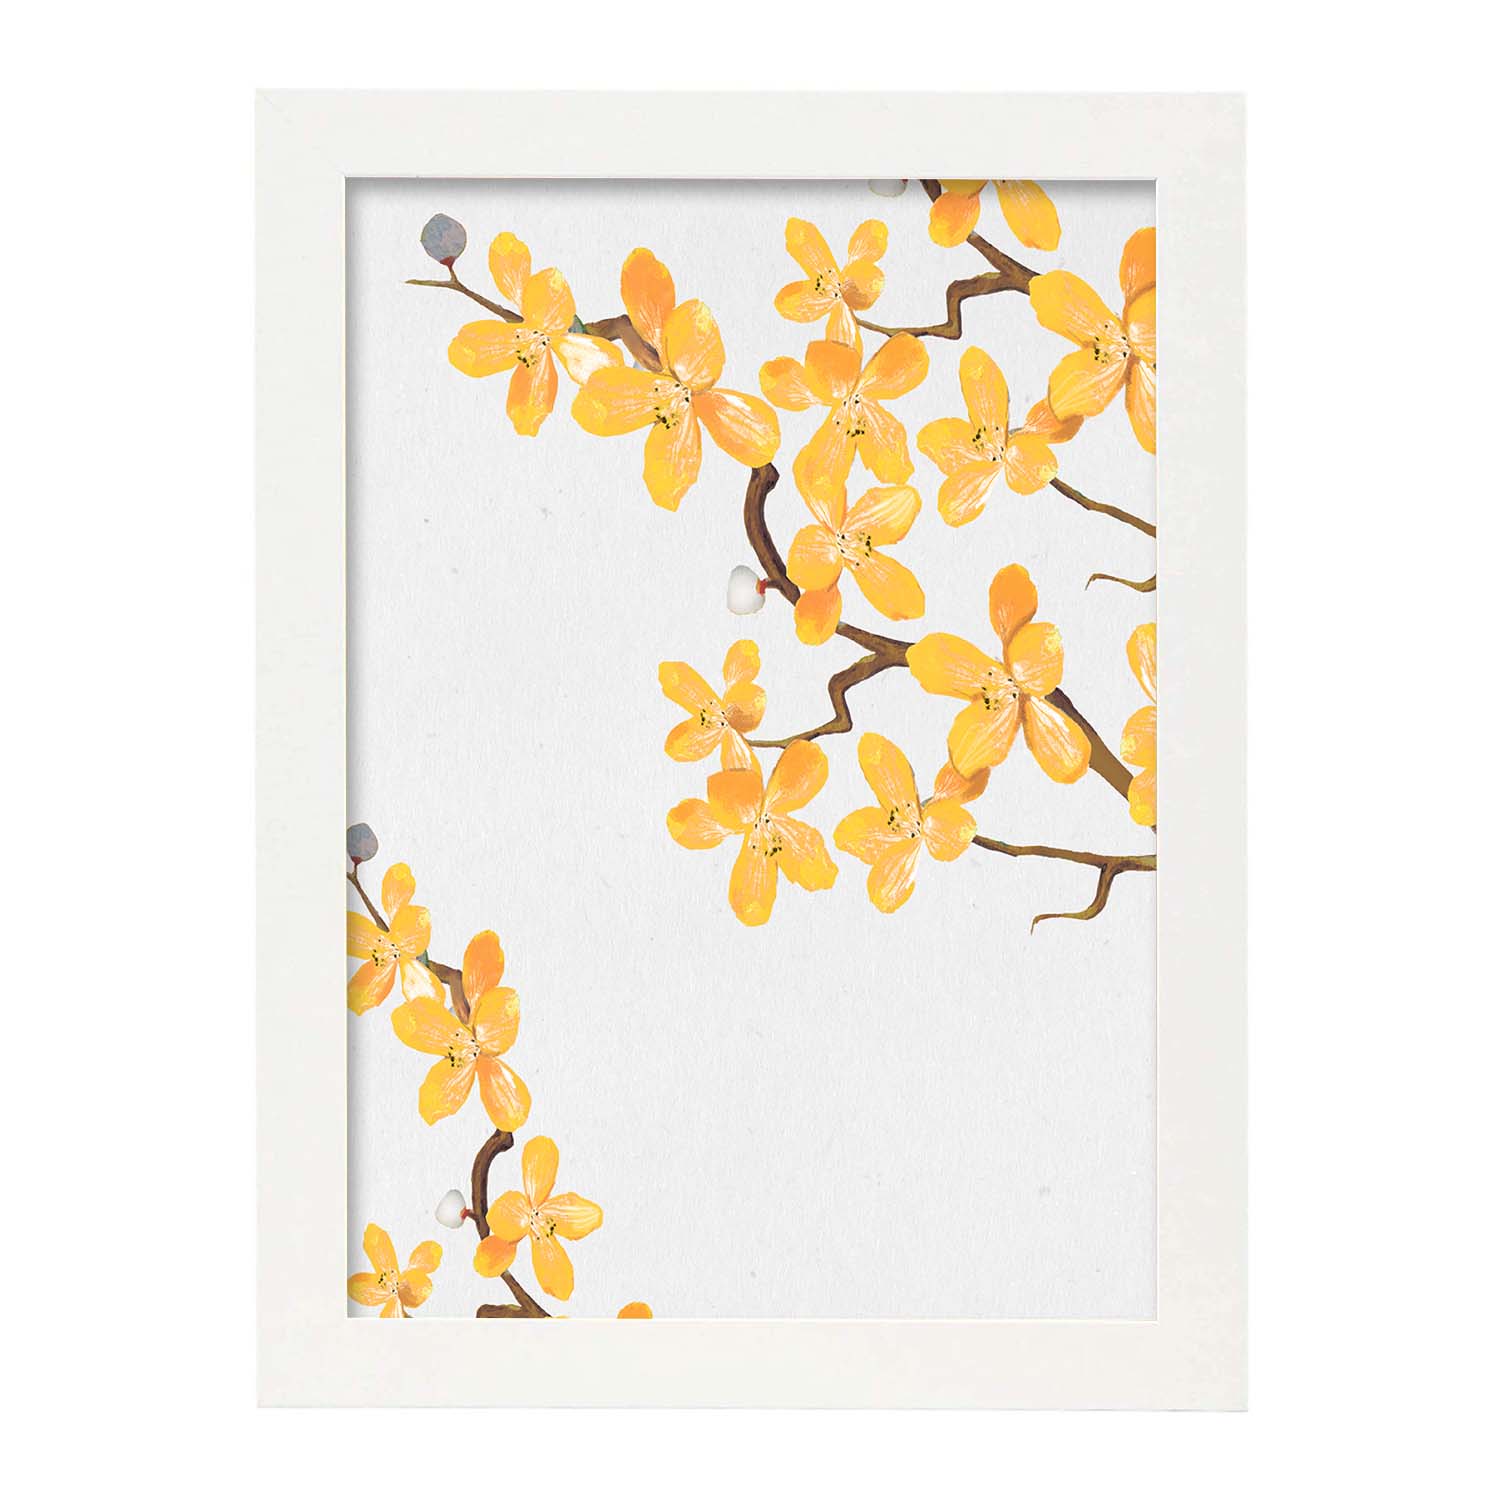 Poster de ramas con estilo de óleo. Lámina Ramas 6, con dibujos pintados de ramas, hojas, y flores.-Artwork-Nacnic-A3-Marco Blanco-Nacnic Estudio SL